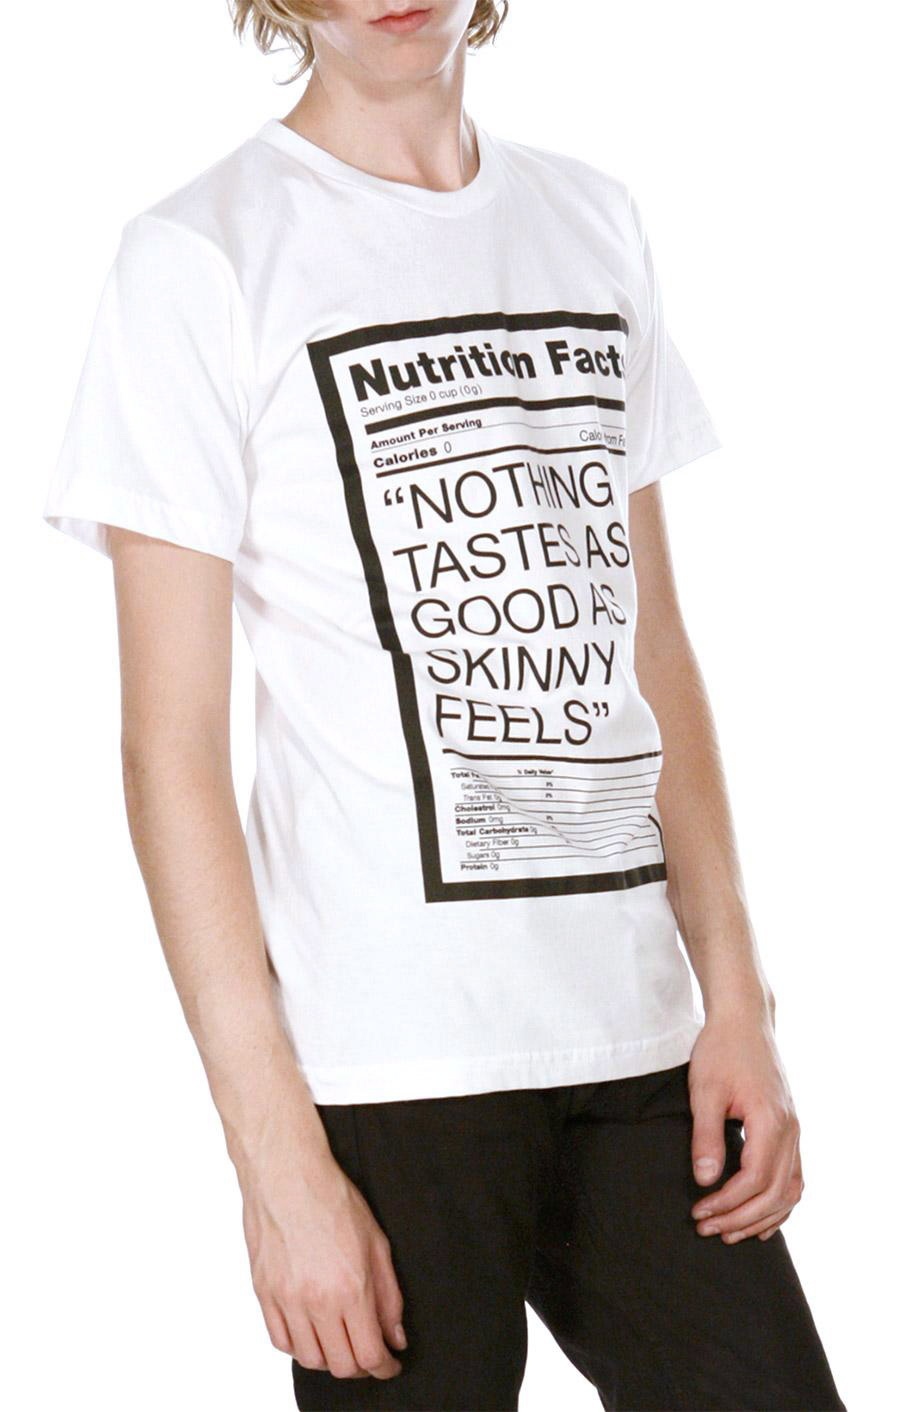 HBC to pull 'Nothing Tastes As Good As Skinny Feels' T-shirt | CTV News